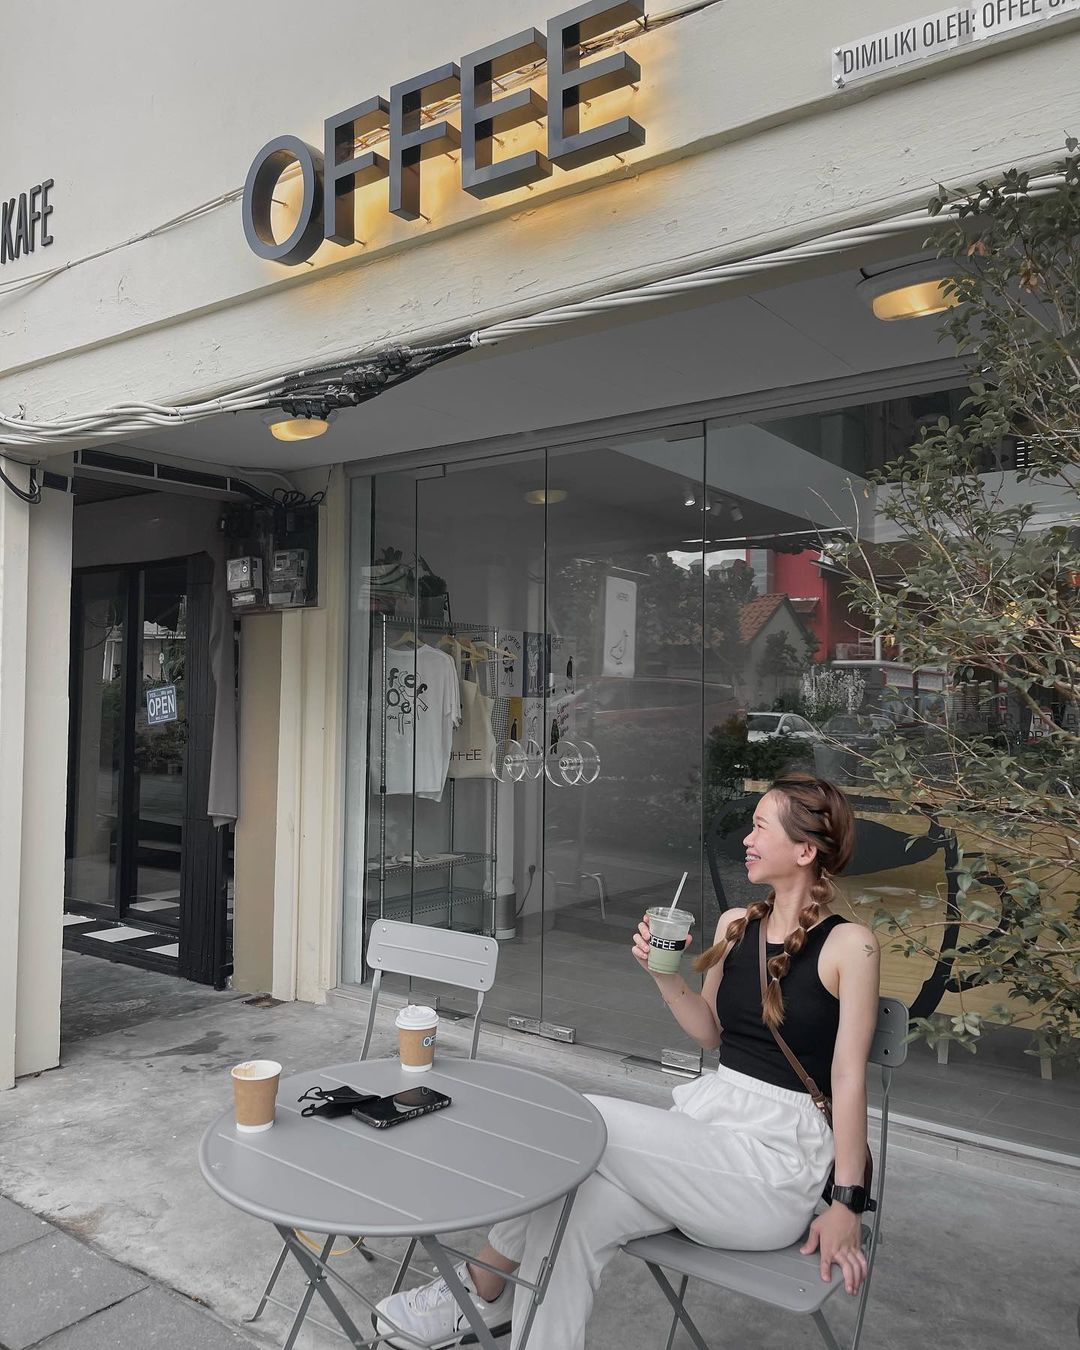 Offee Cafe in Johor - cafe